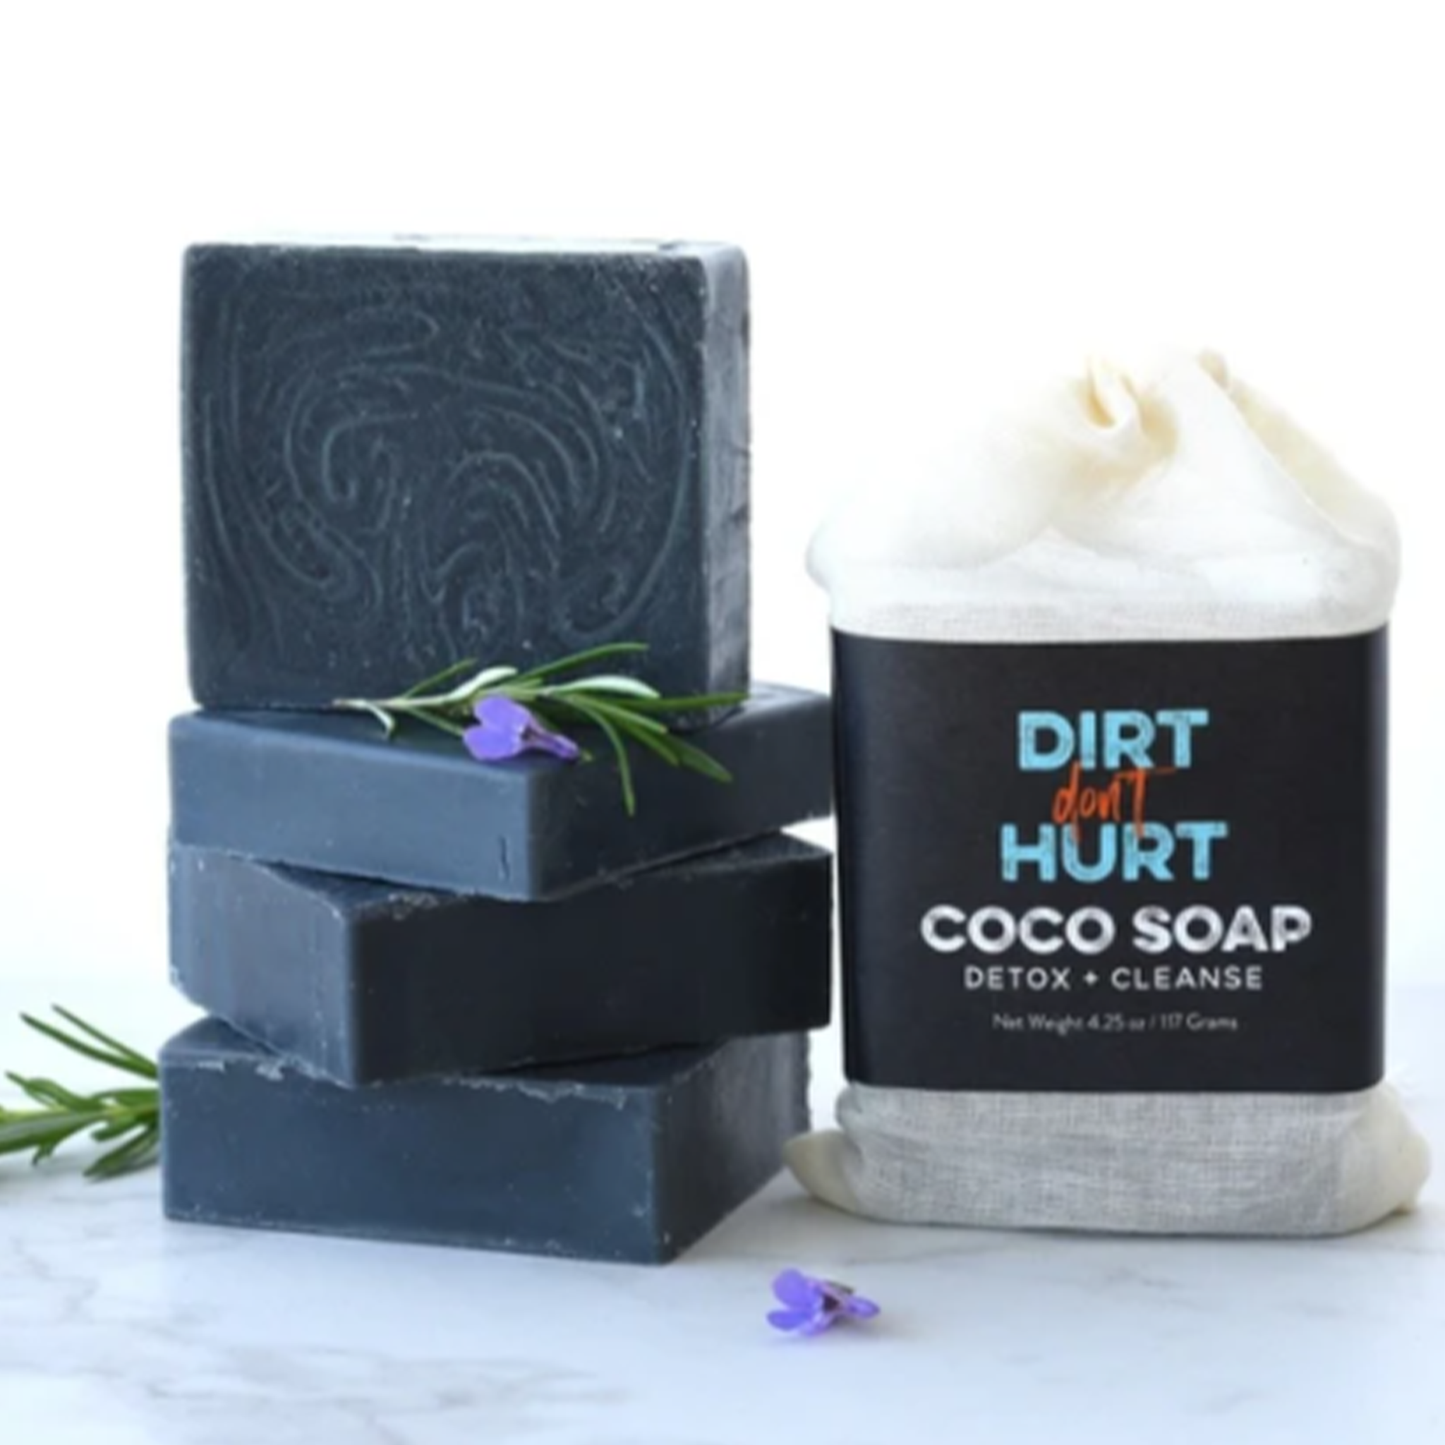 Dirt Don't Hurt Detox + Cleanse Charcoal Body Soap